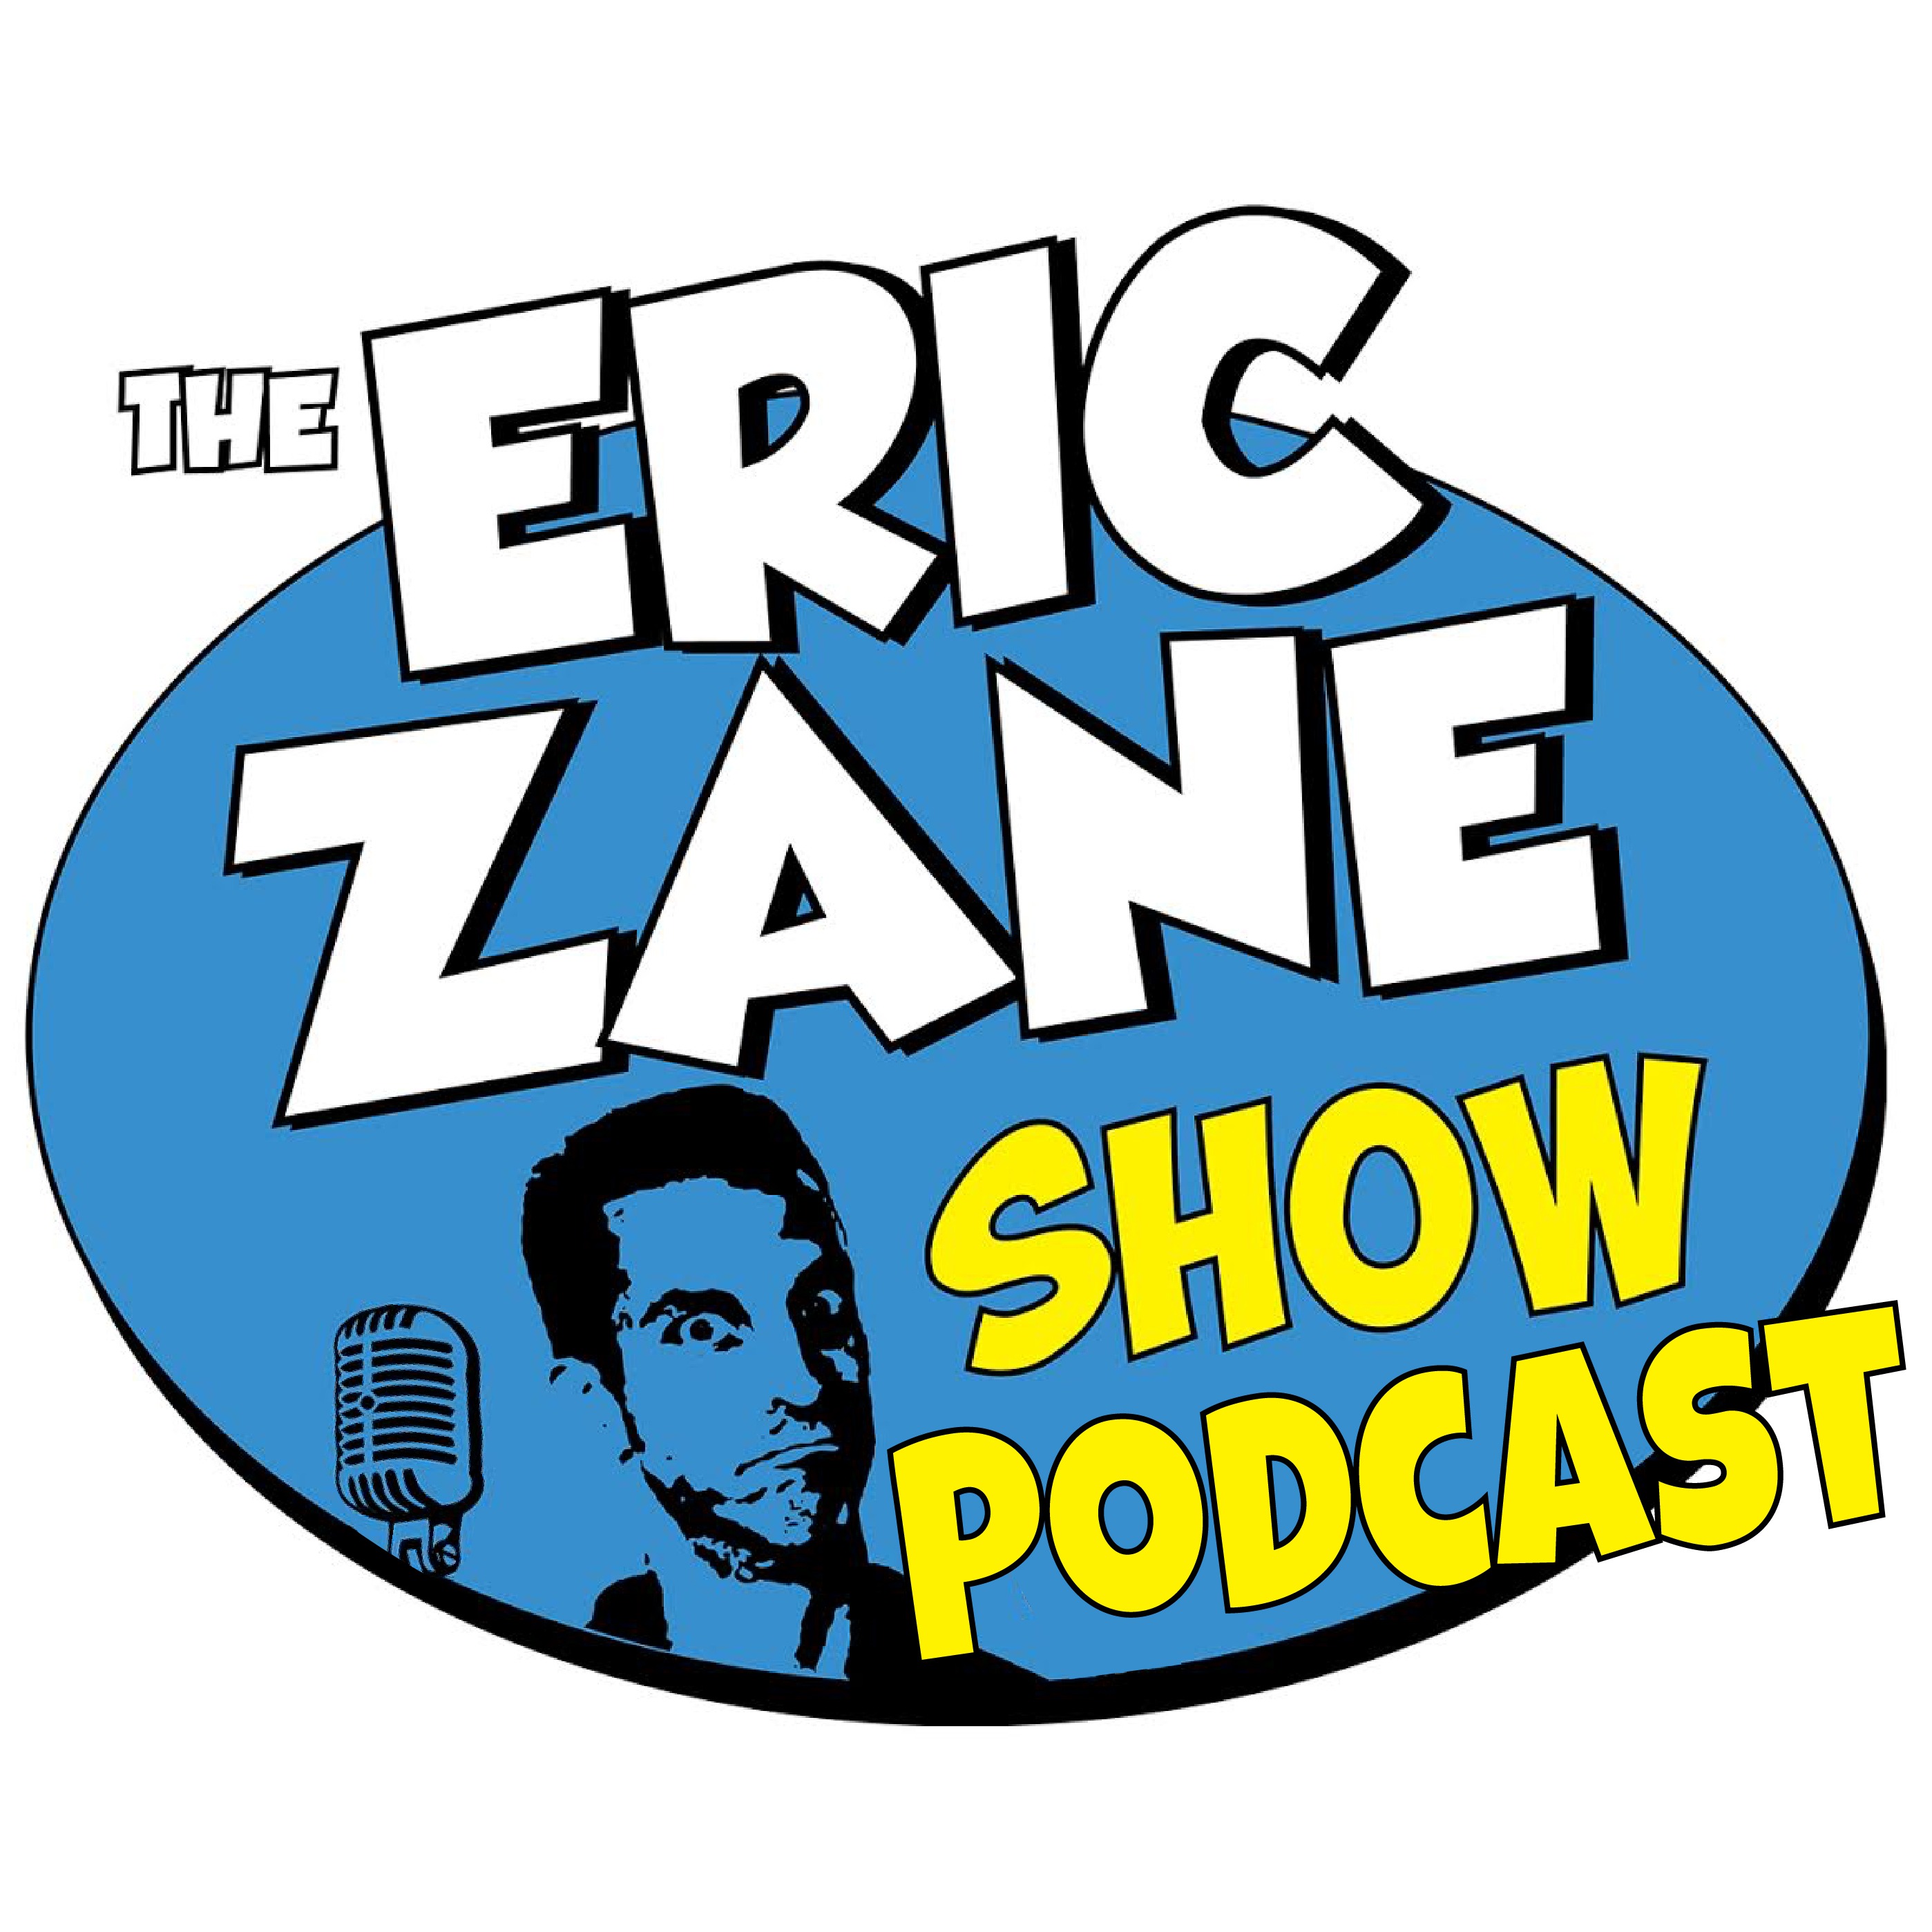 Eric Zane Show Podcast 837 I got road raged on because I drive slow